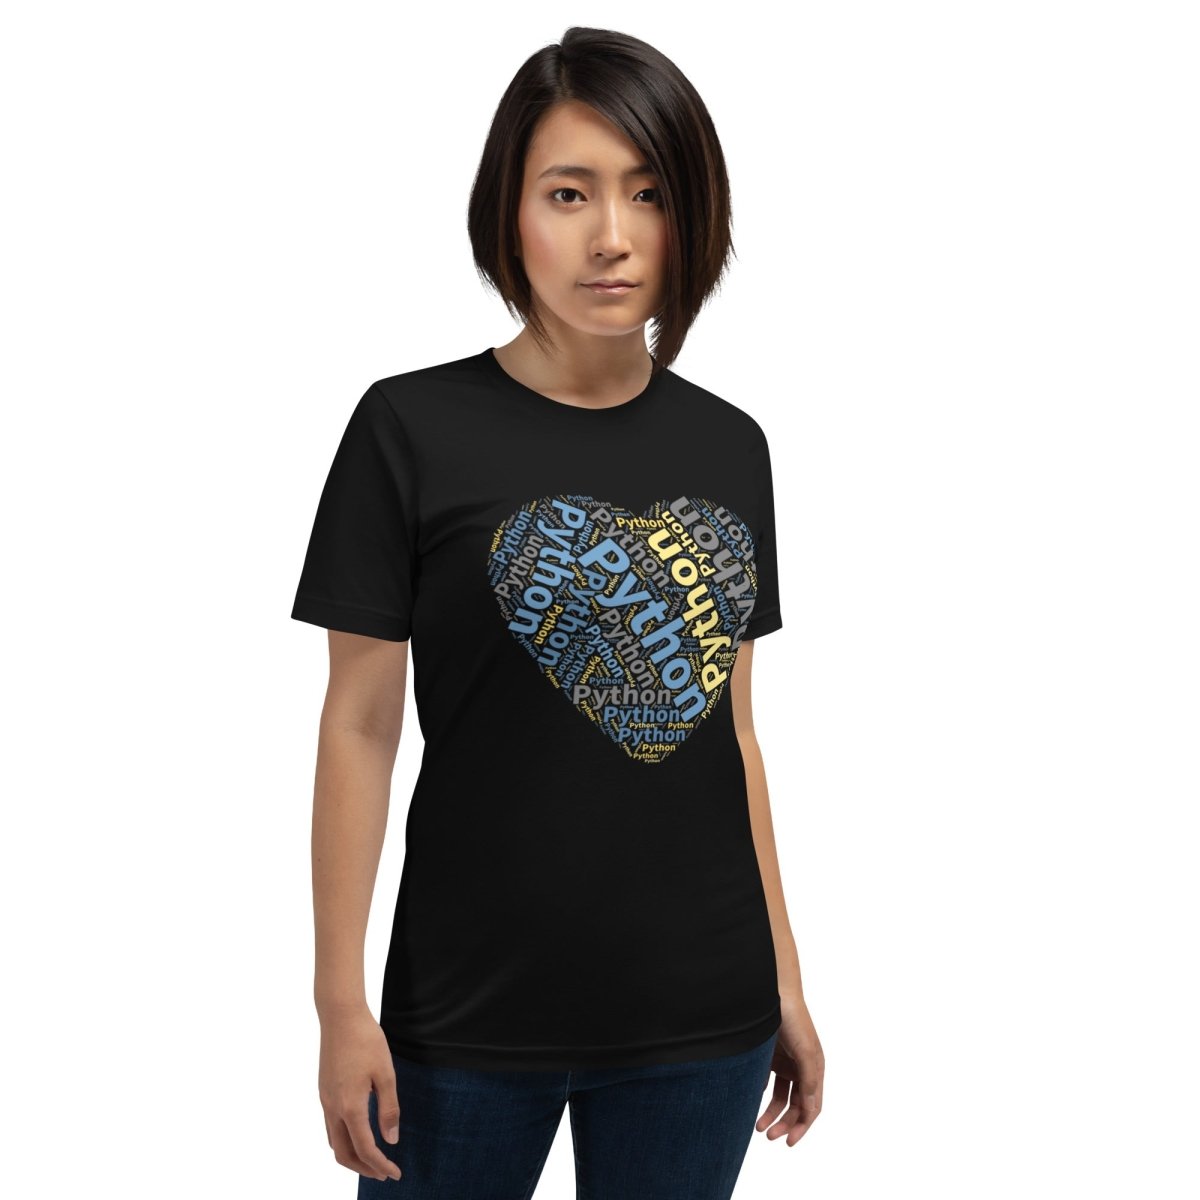 Python Heart Word Cloud T - Shirt (unisex) - Black - AI Store